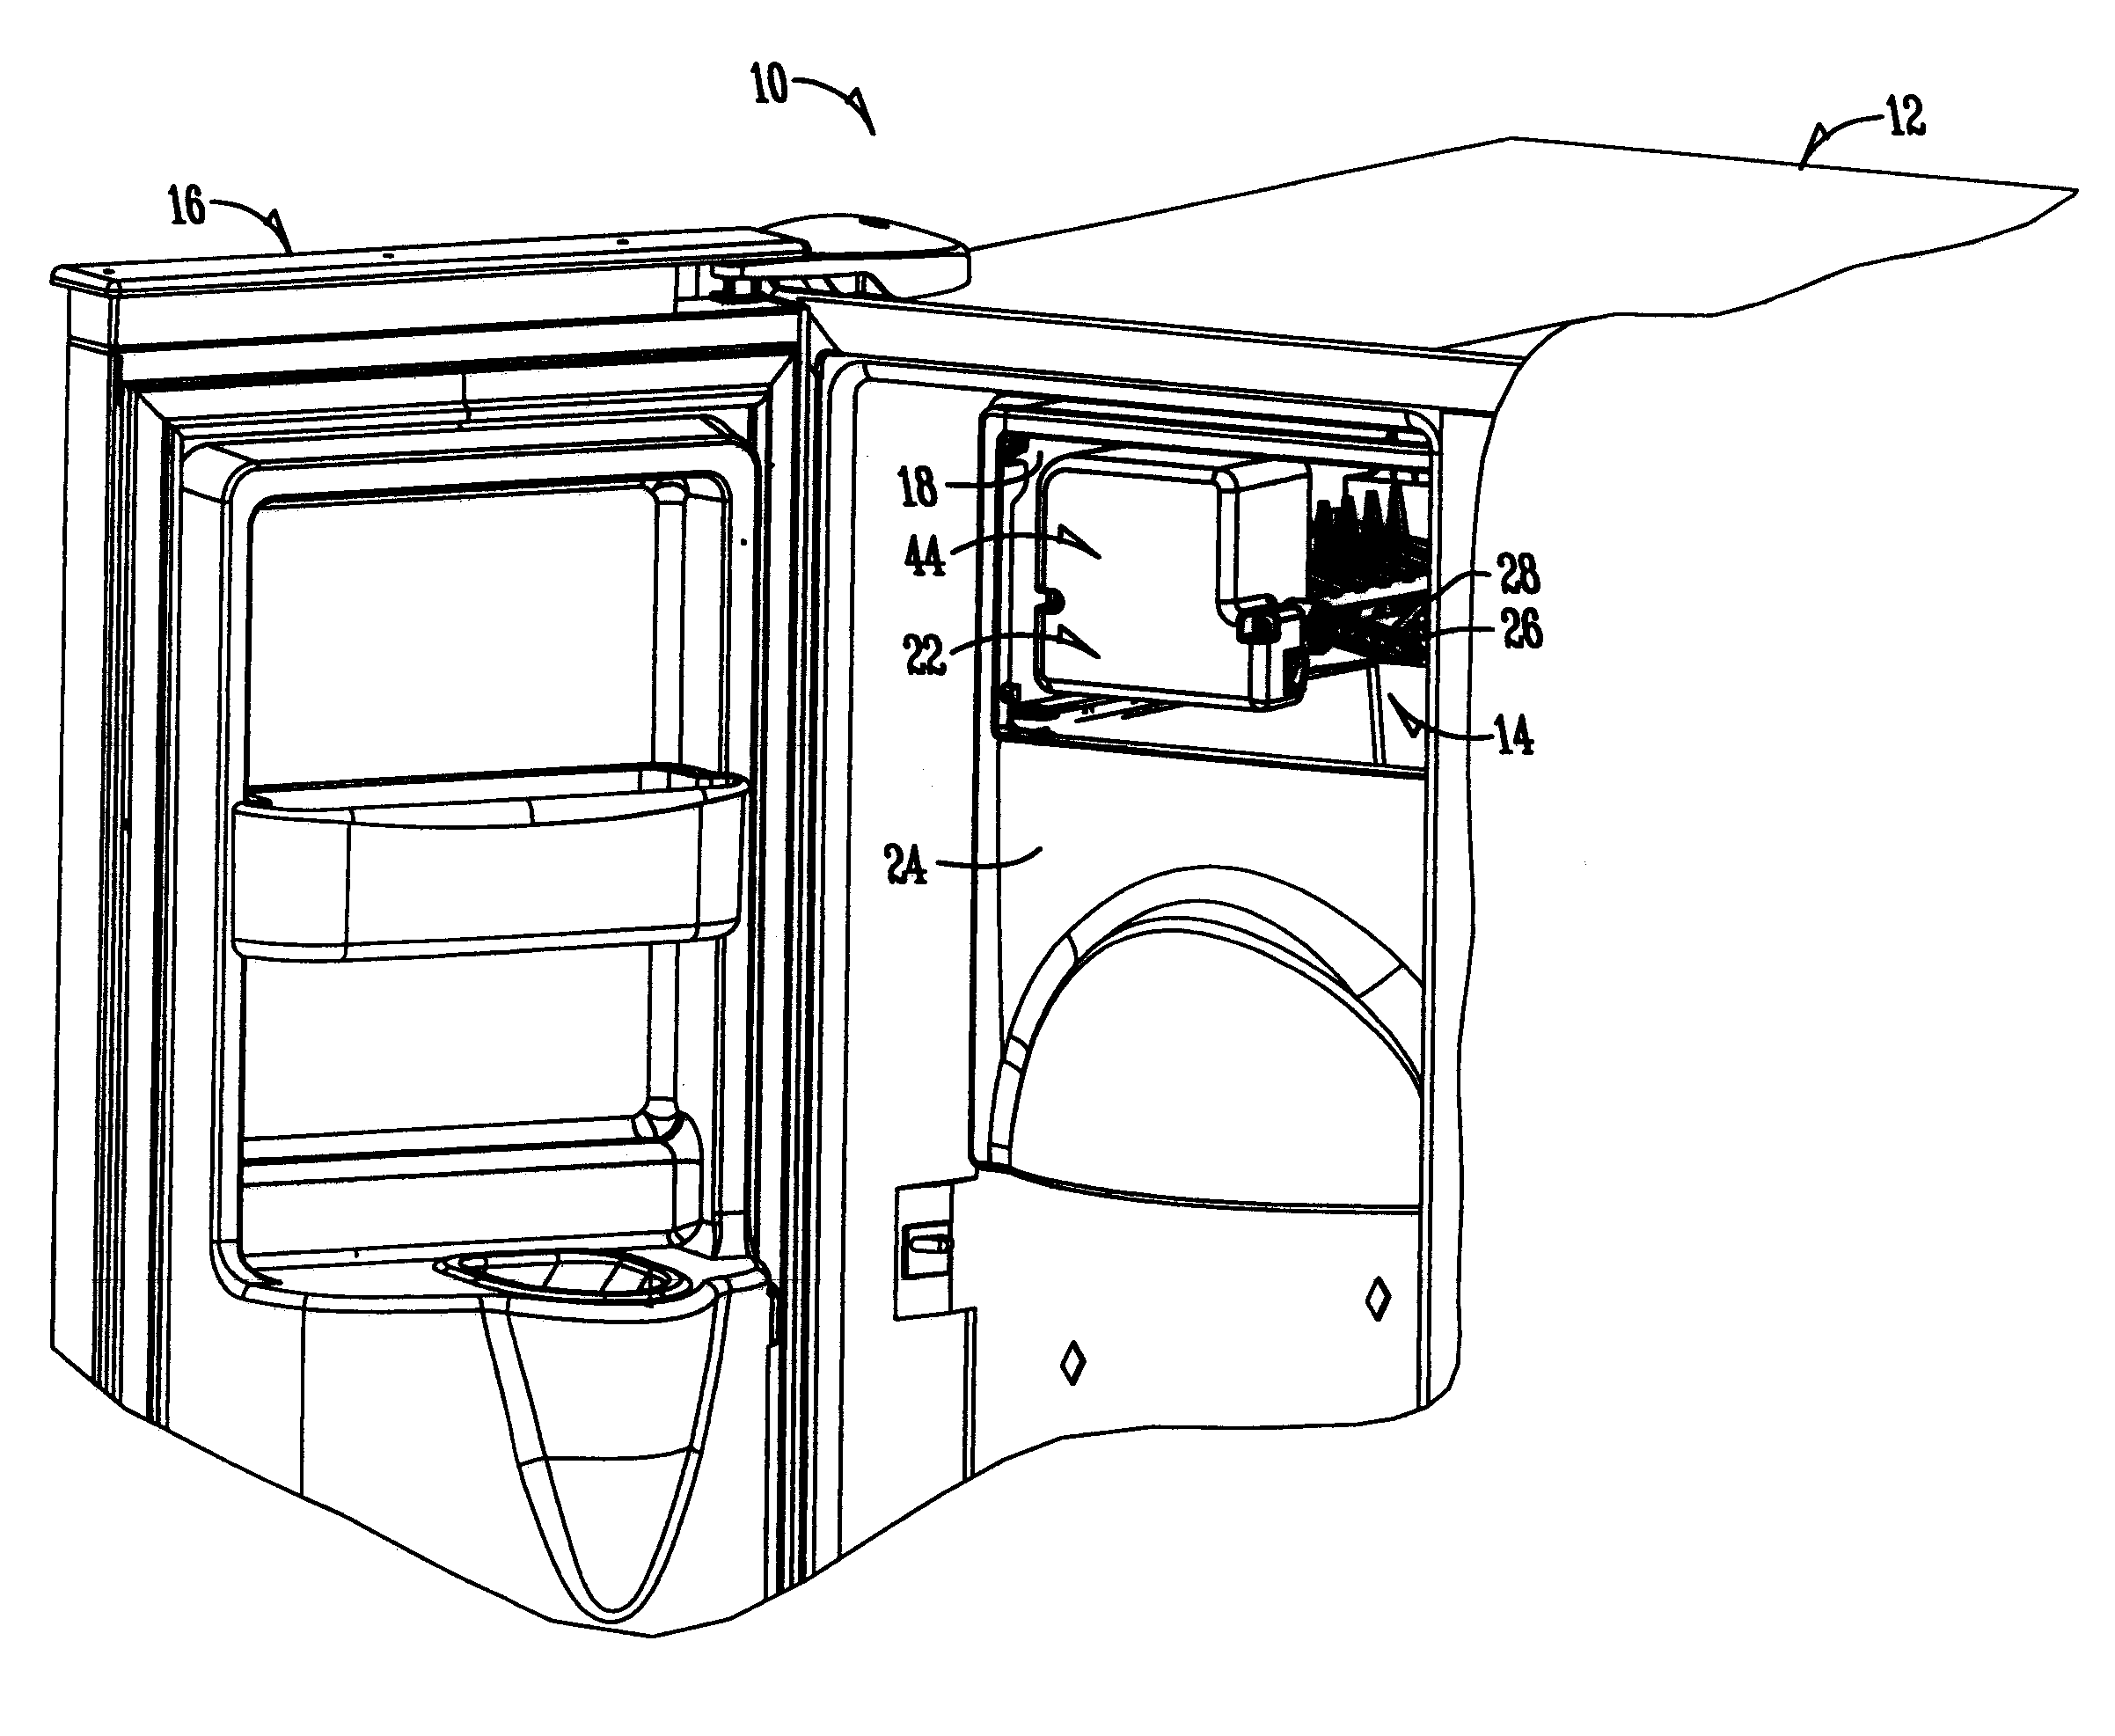 Refrigerator icemaker with raised perimeter walls